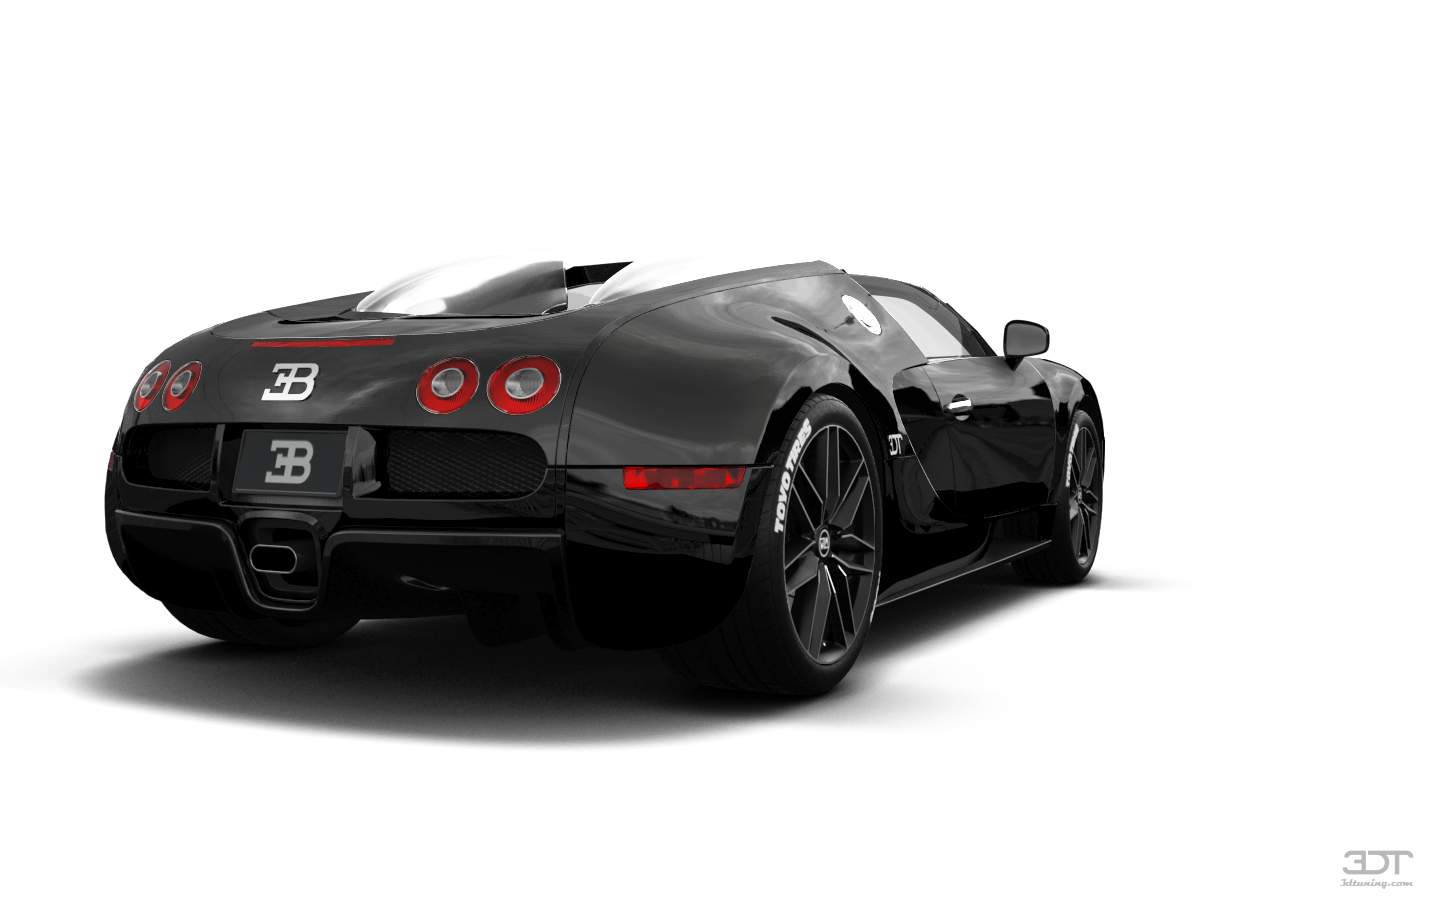 Bugatti Veyron 16.4 Grand Sport Vitesse 2 door targa top 2012